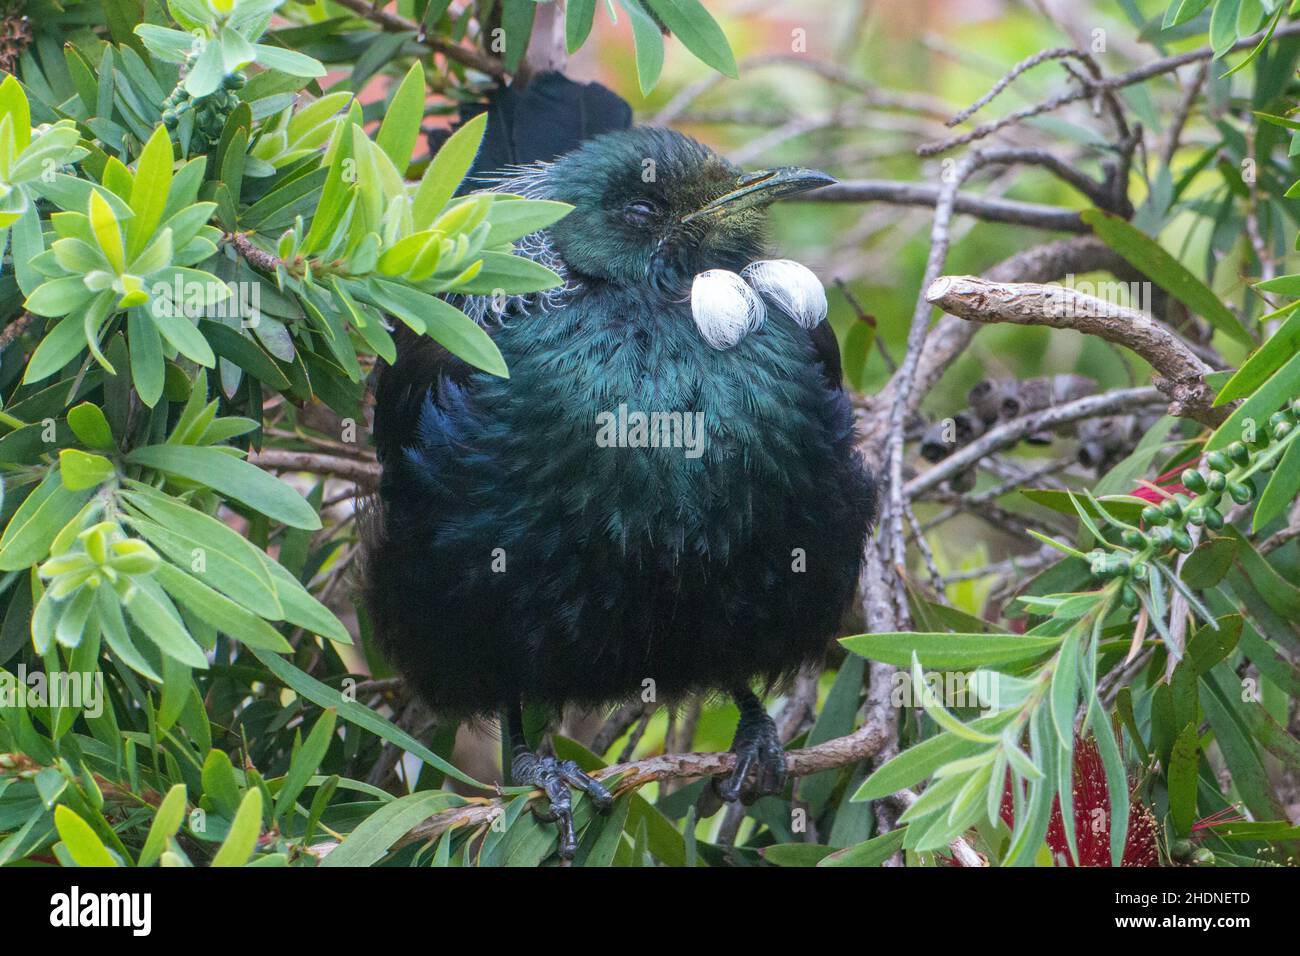 A Tui (Prosthemadera novaeseelandiae) perched in a bottlebrush bush, native, edemic, New Zealand bird Stock Photo